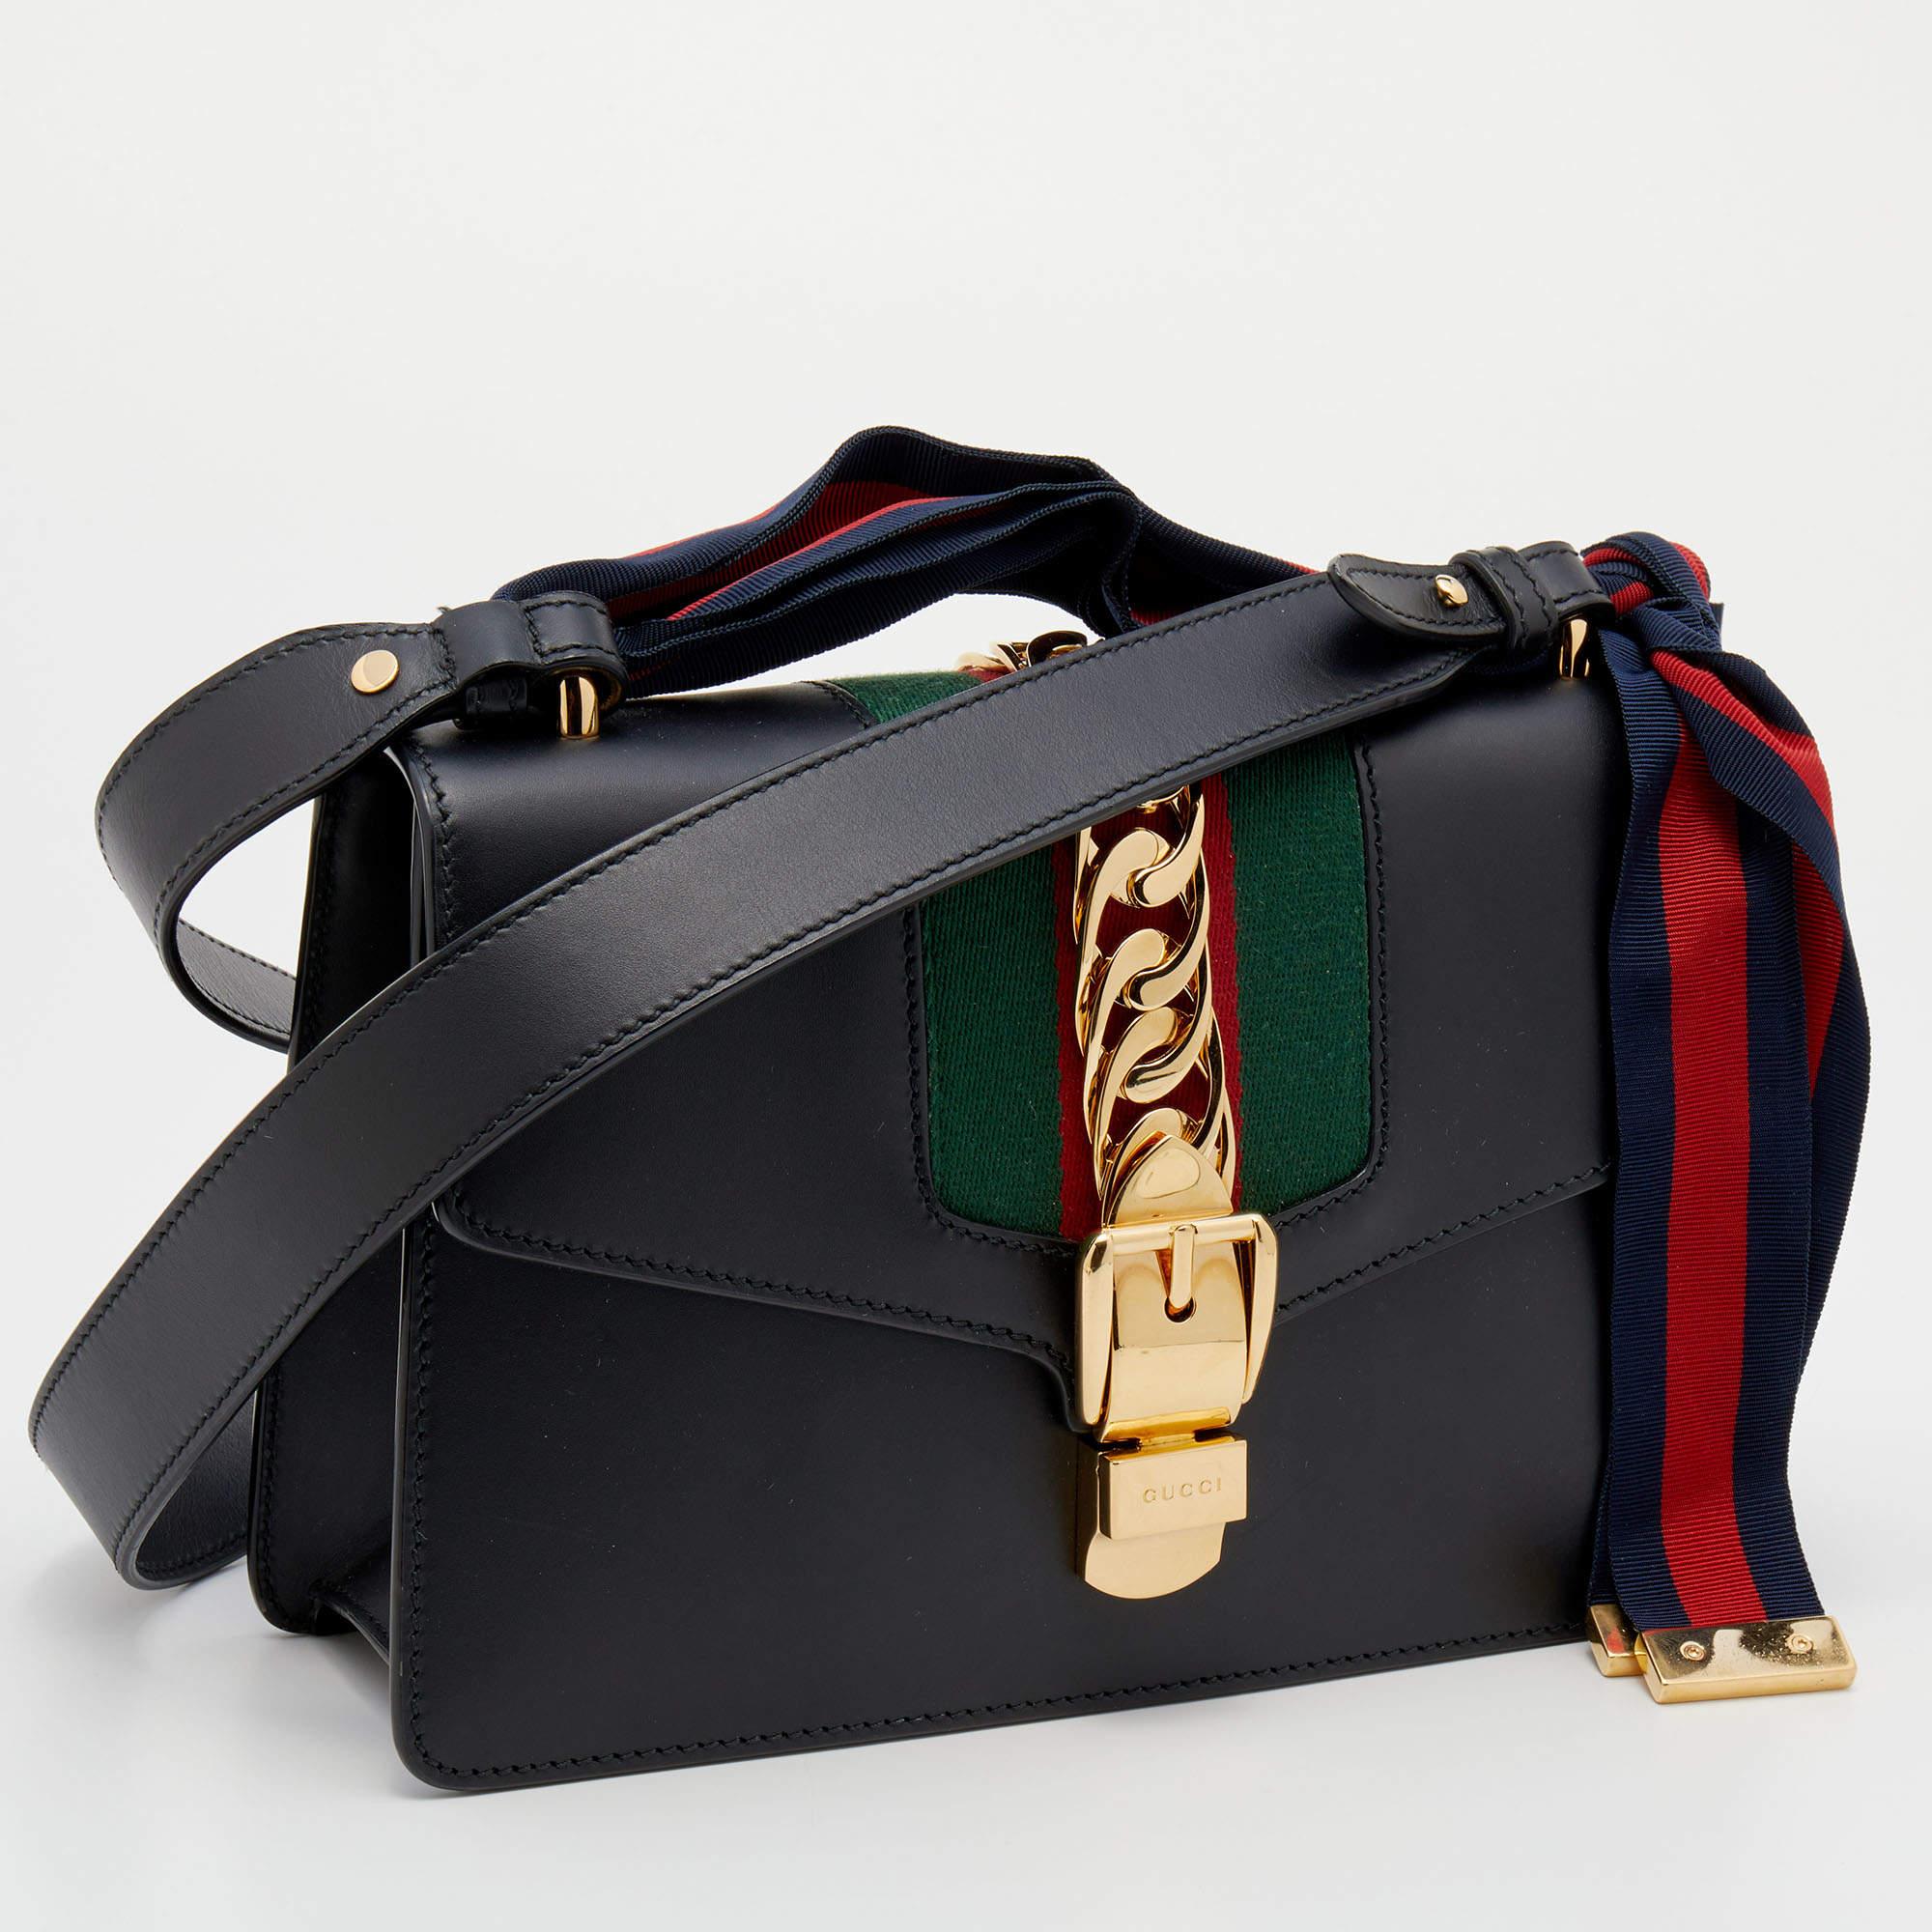 Gucci Black Leather Medium Sylvie Shoulder Bag 2